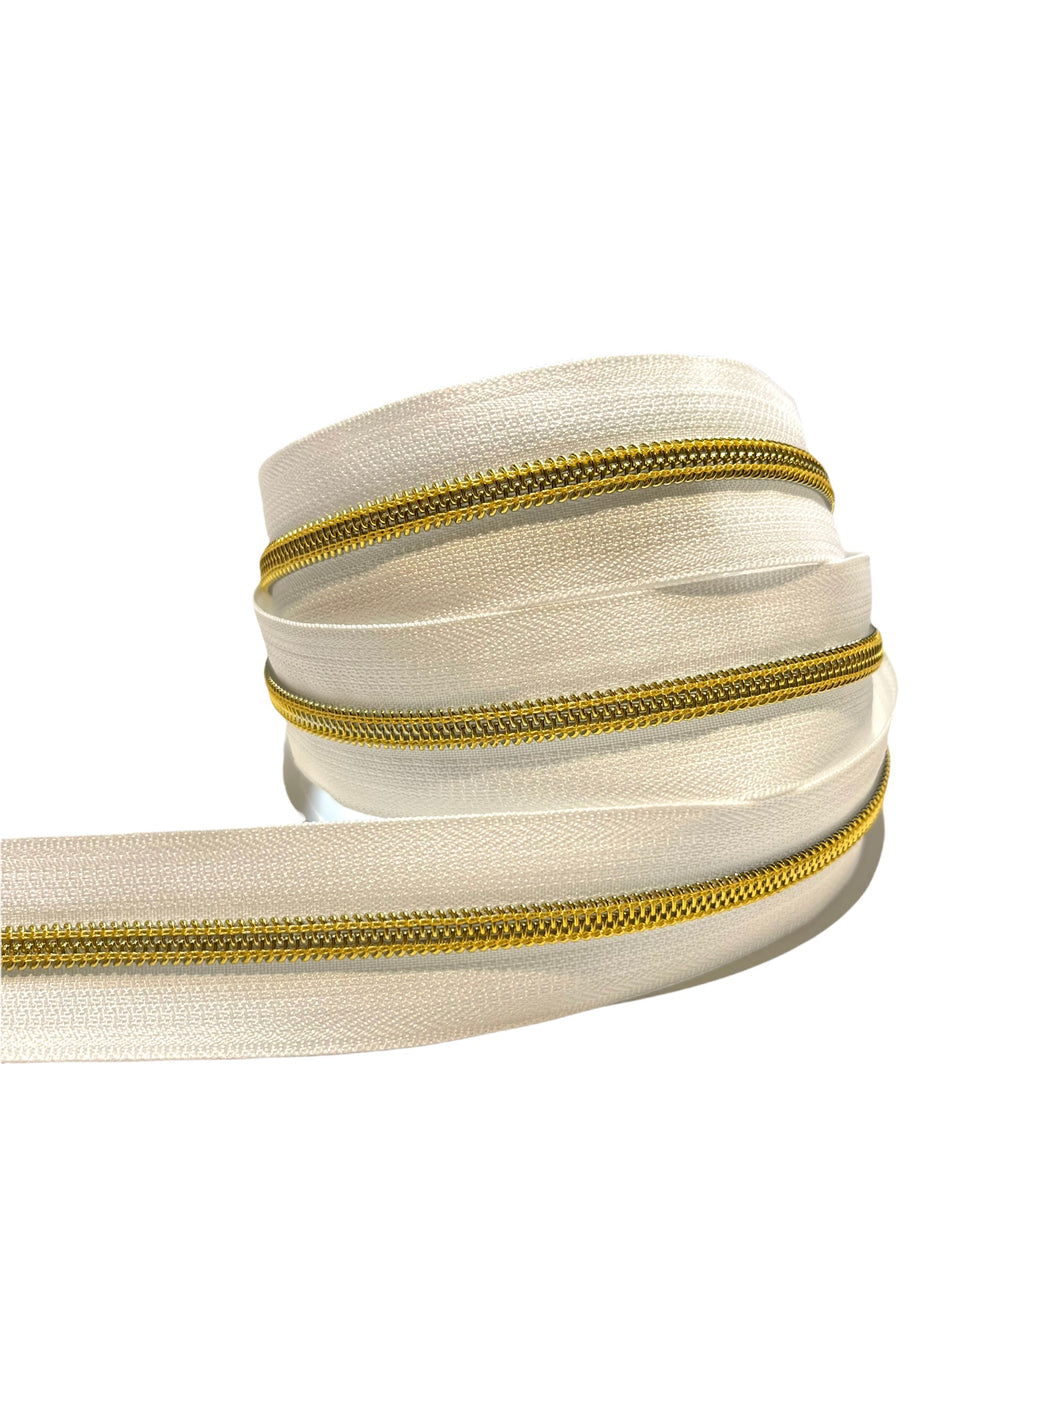 #5 Nylon Zipper Tape - White Gold - by the yard